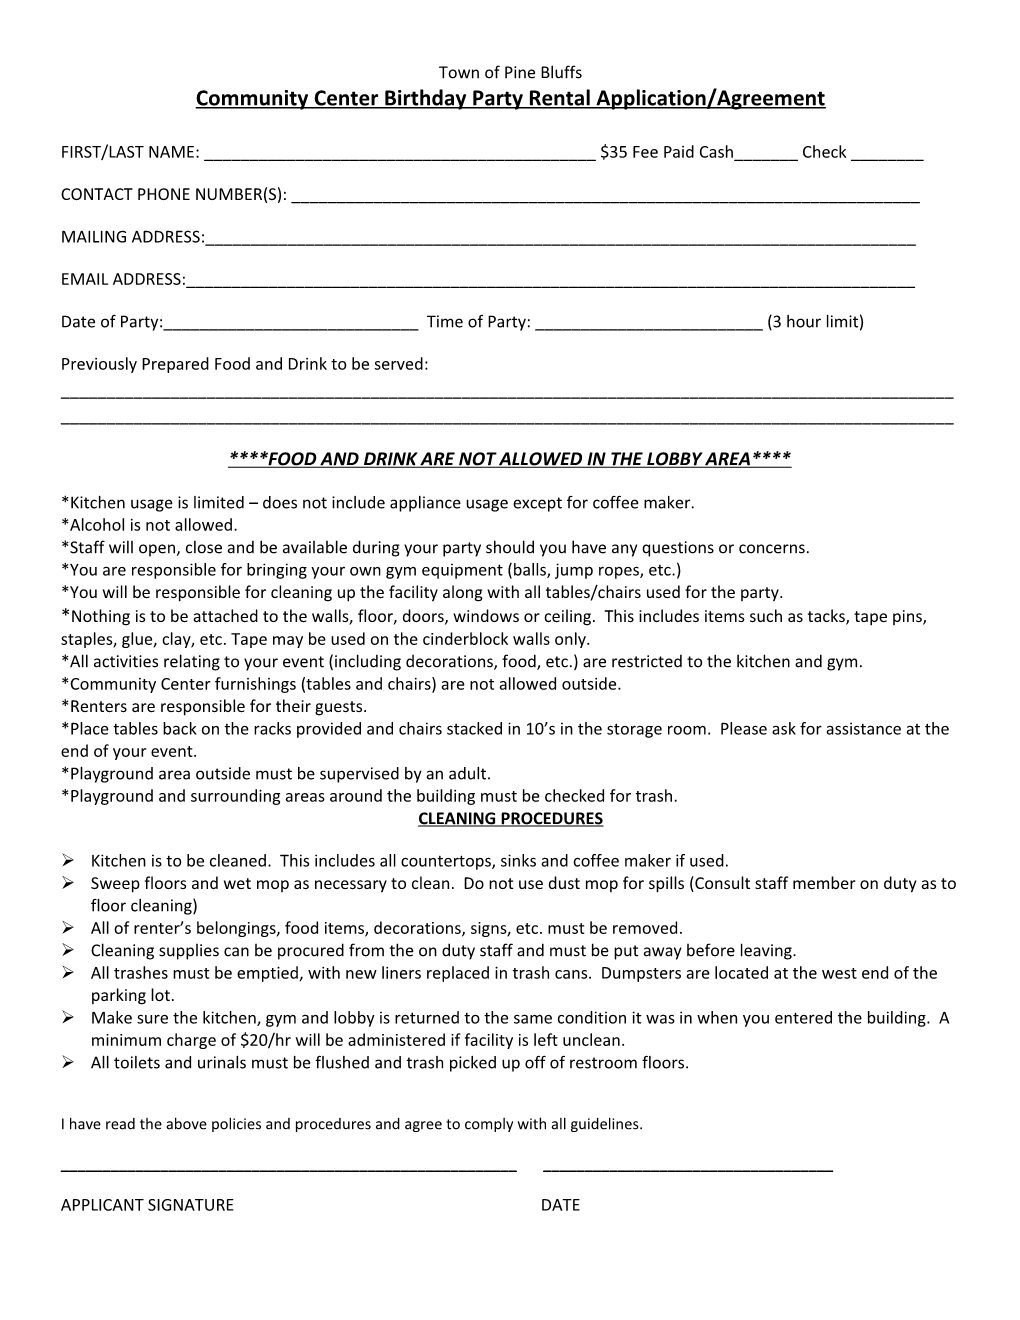 Community Center Birthday Party Rental Application/Agreement